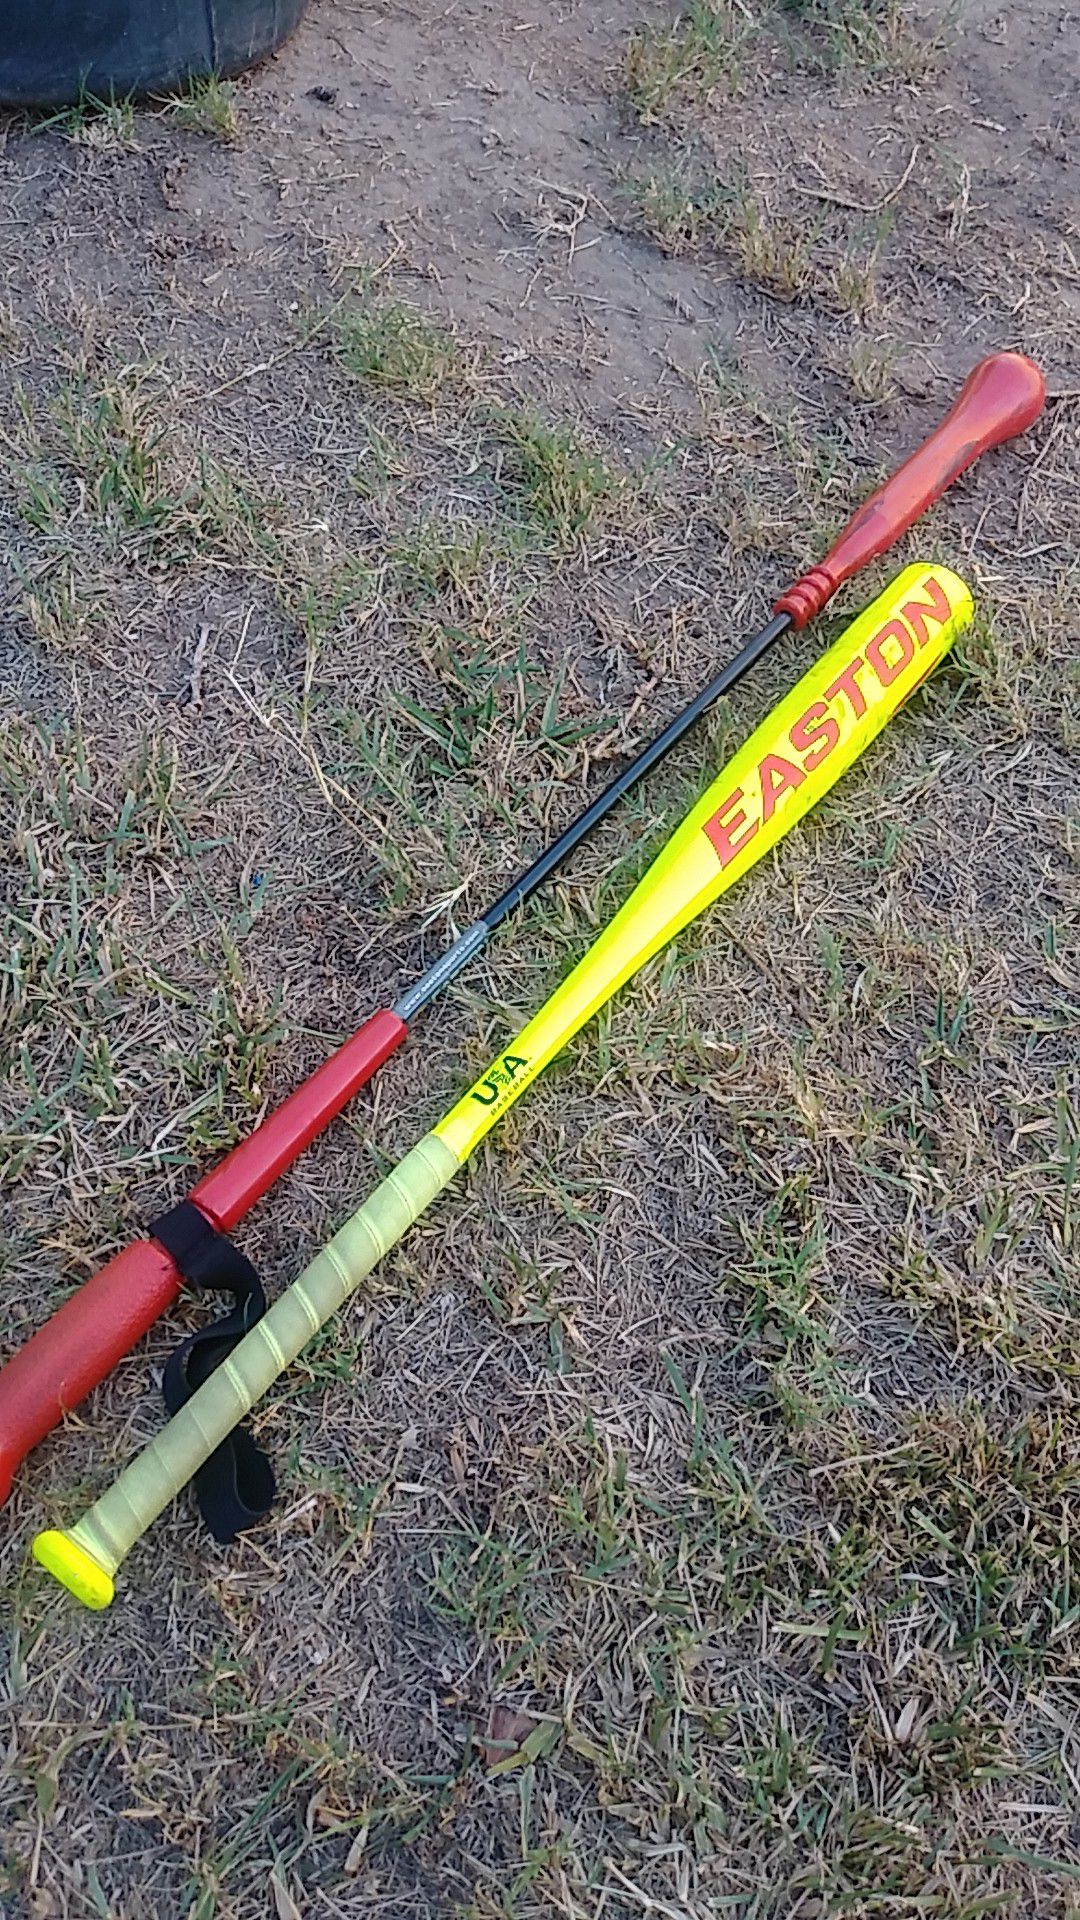 USA youth baseball bat Easton -10 size 30/20